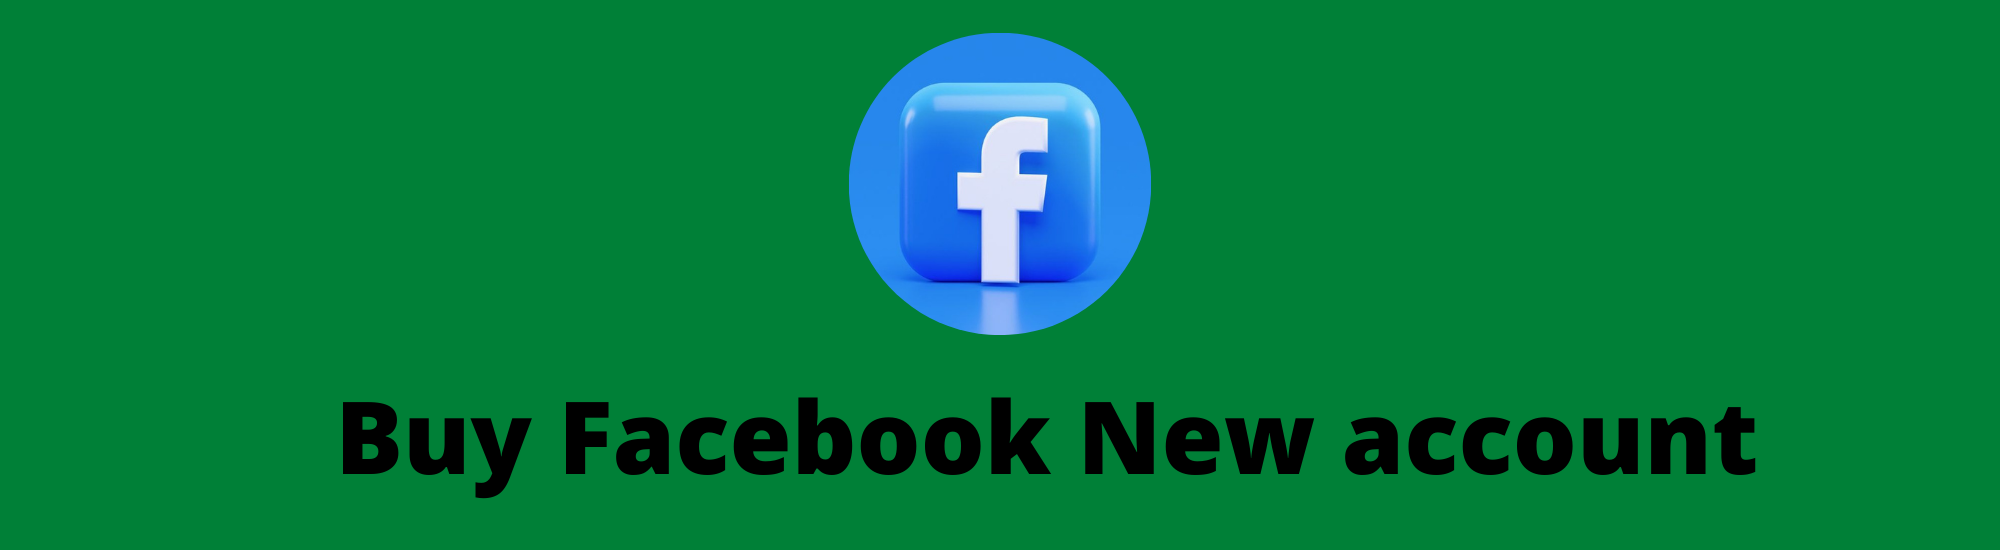 Buy Facebook New account